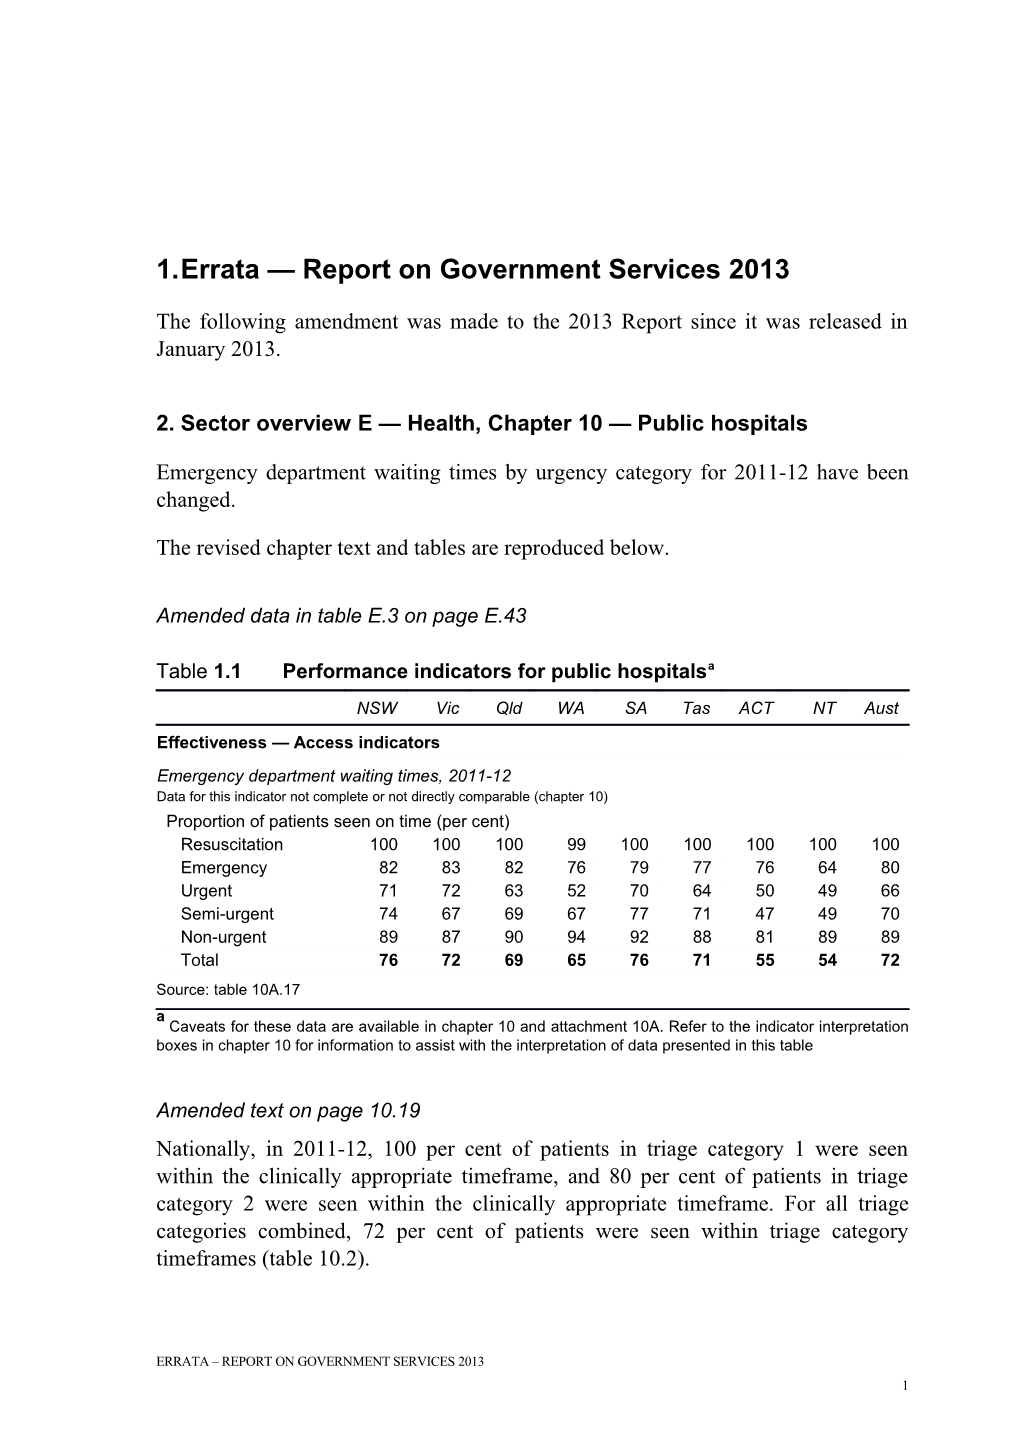 Errata Report on Government Services 2013